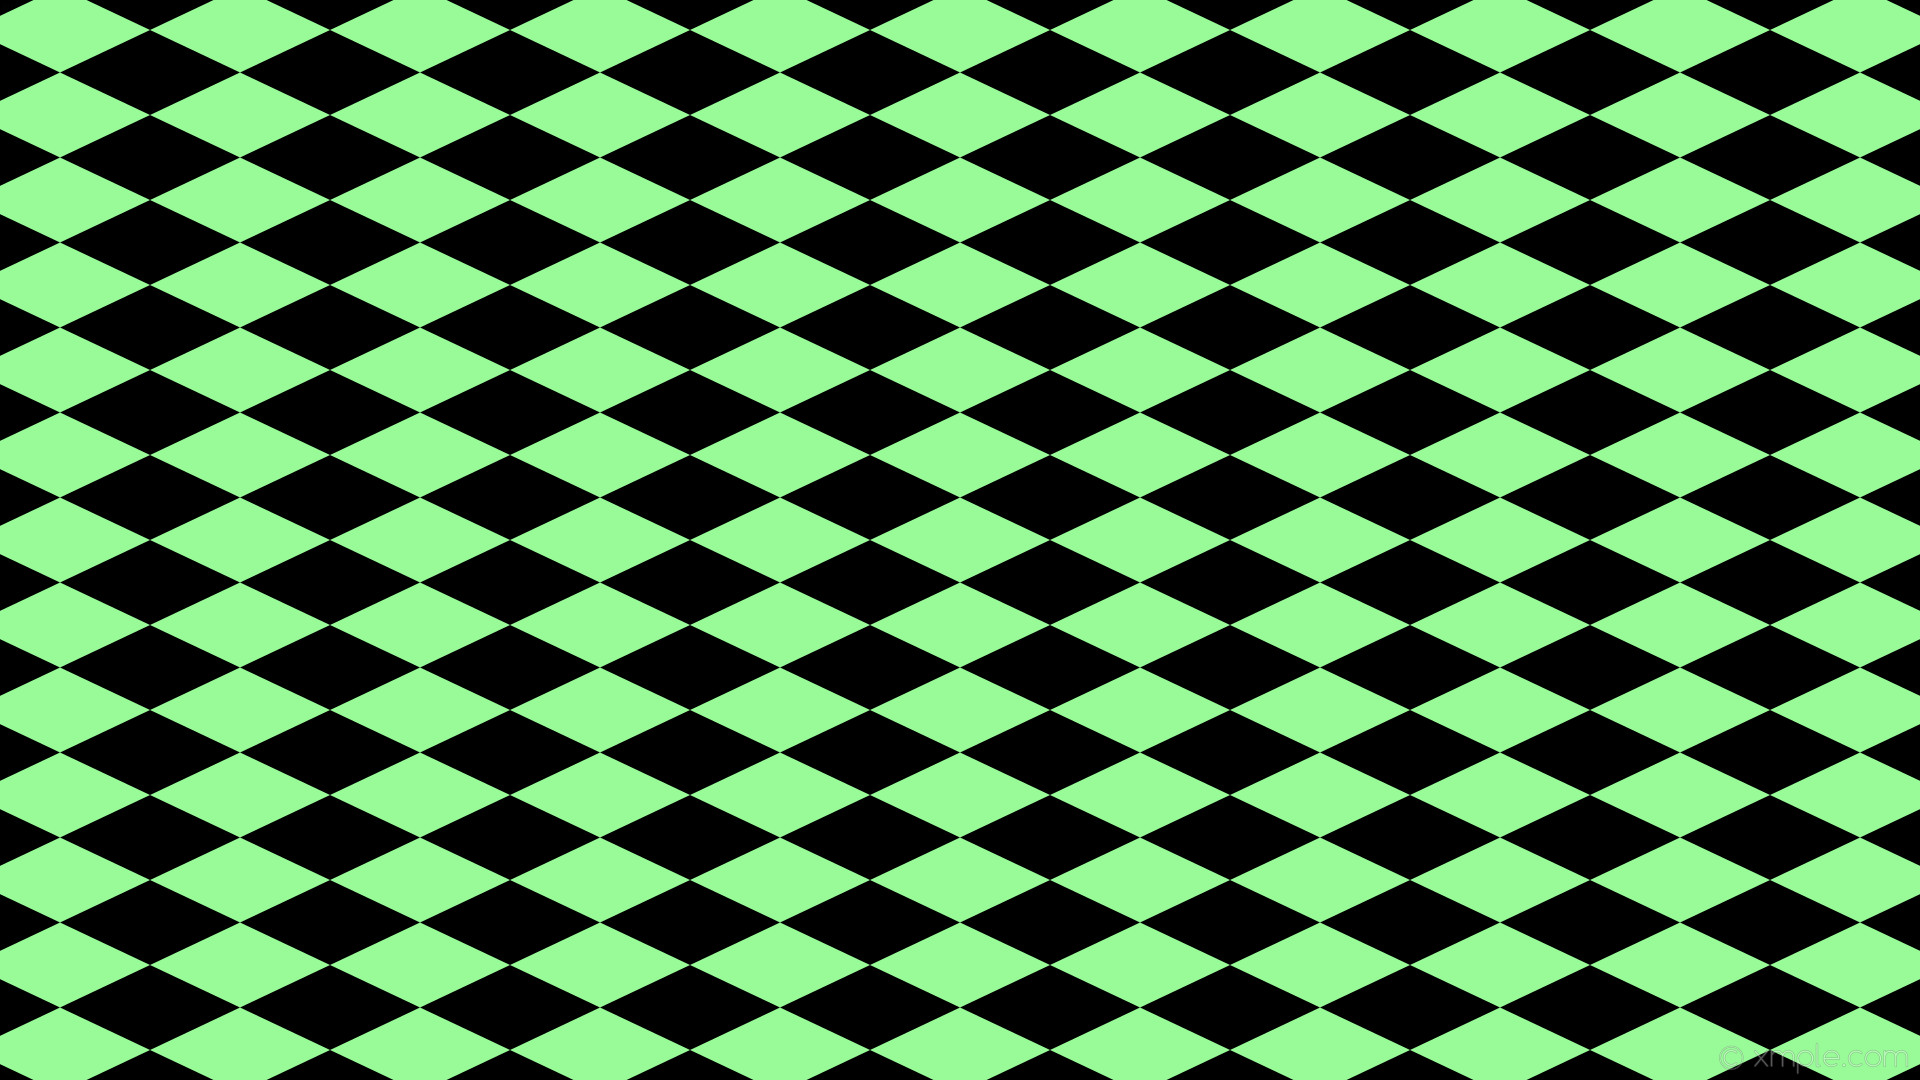 1920x1080 wallpaper rhombus green lozenge black diamond pale green #98fb98 #000000 0Â°  180px 85px